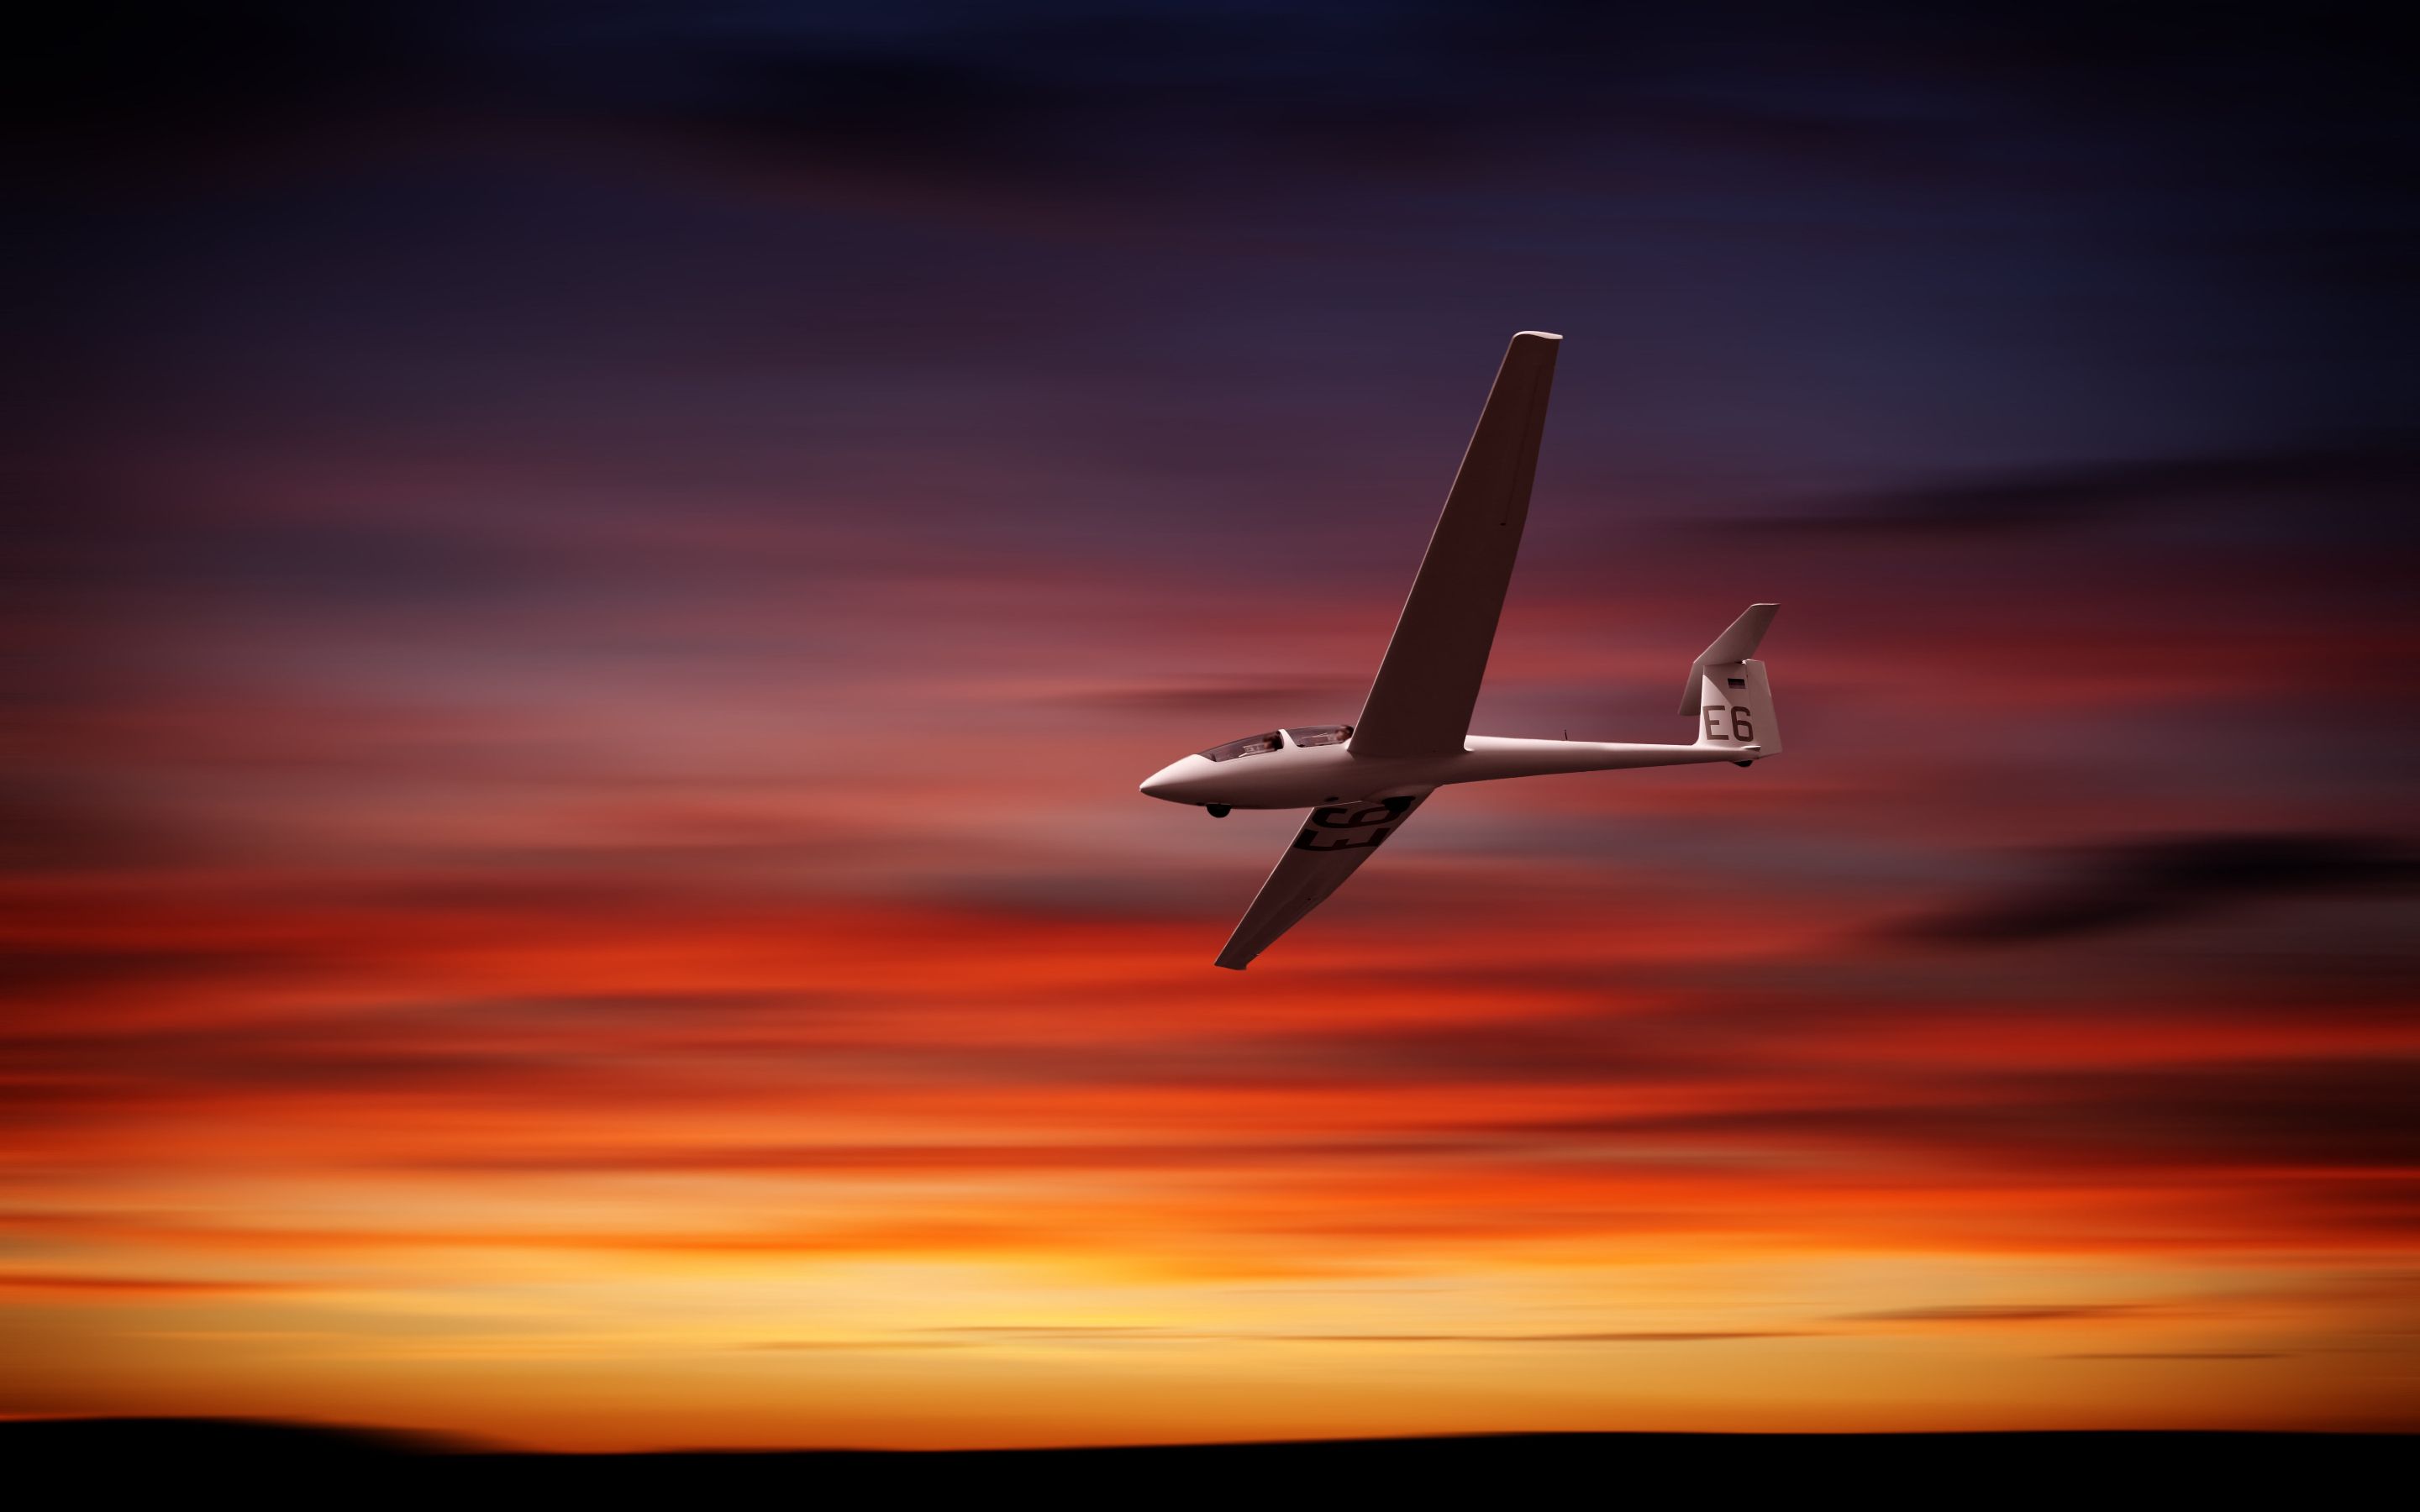 Glider flying at sunset